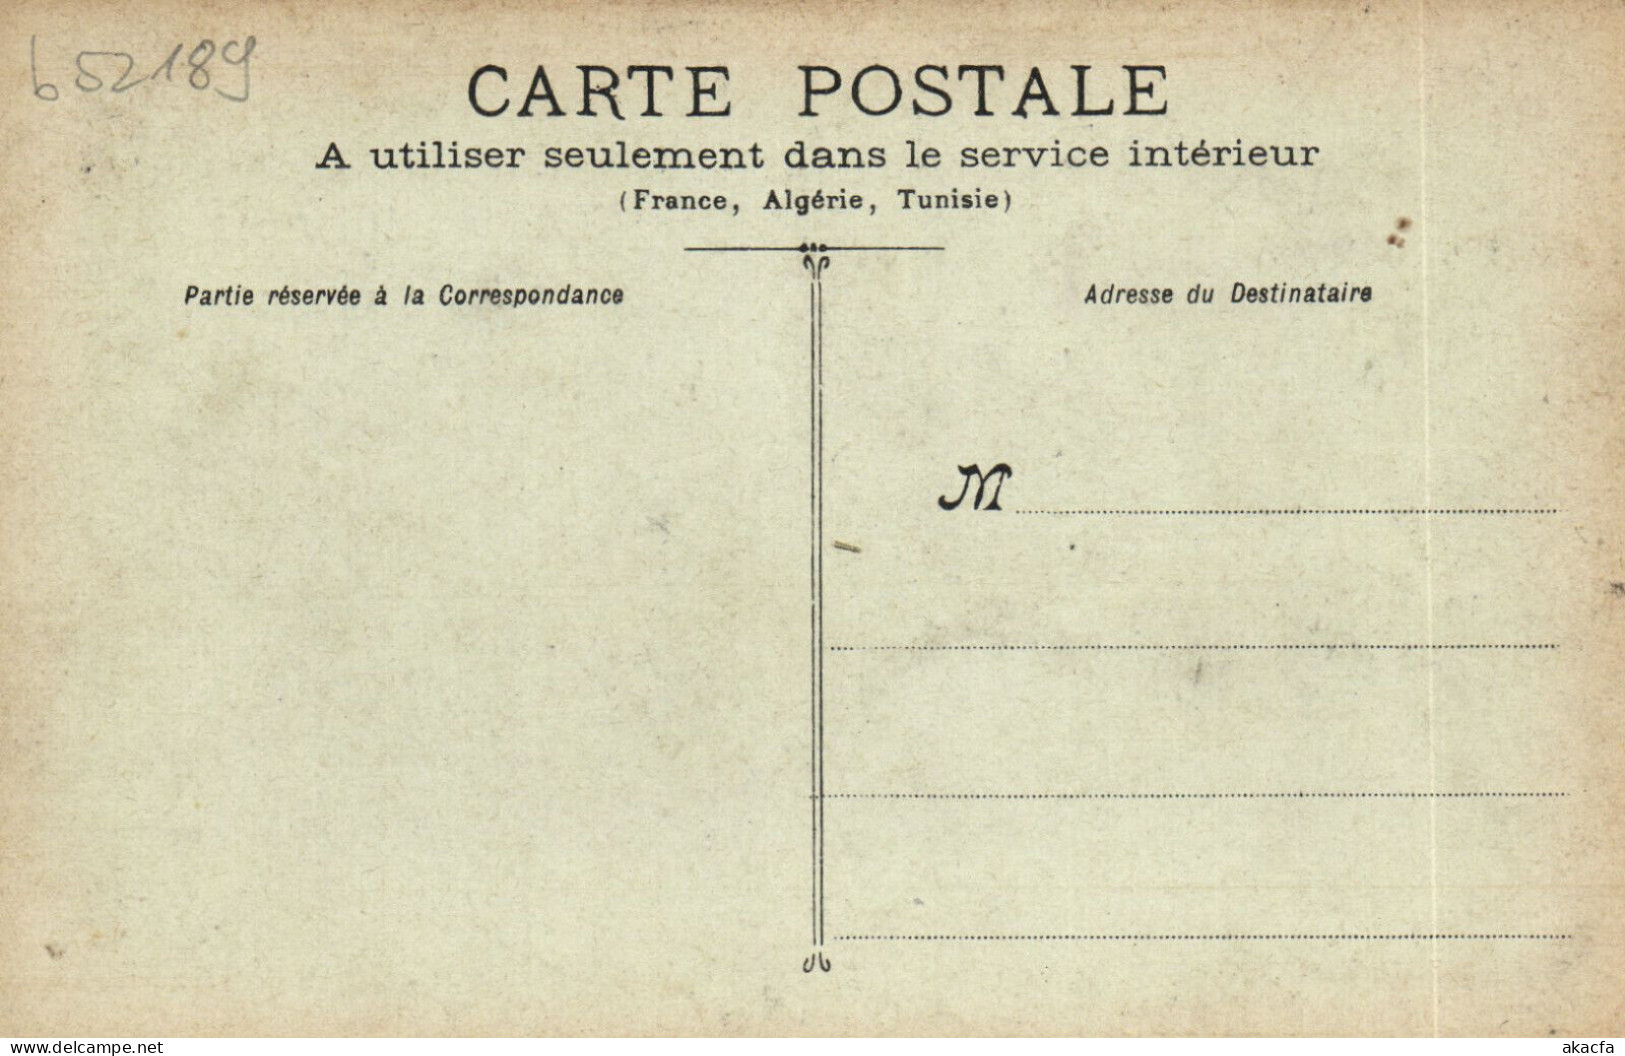 PC ARTIST SIGNED, CH. BEAUVAIS, SPORTS, COURSES, Vintage Postcard (b52189) - Beauvais